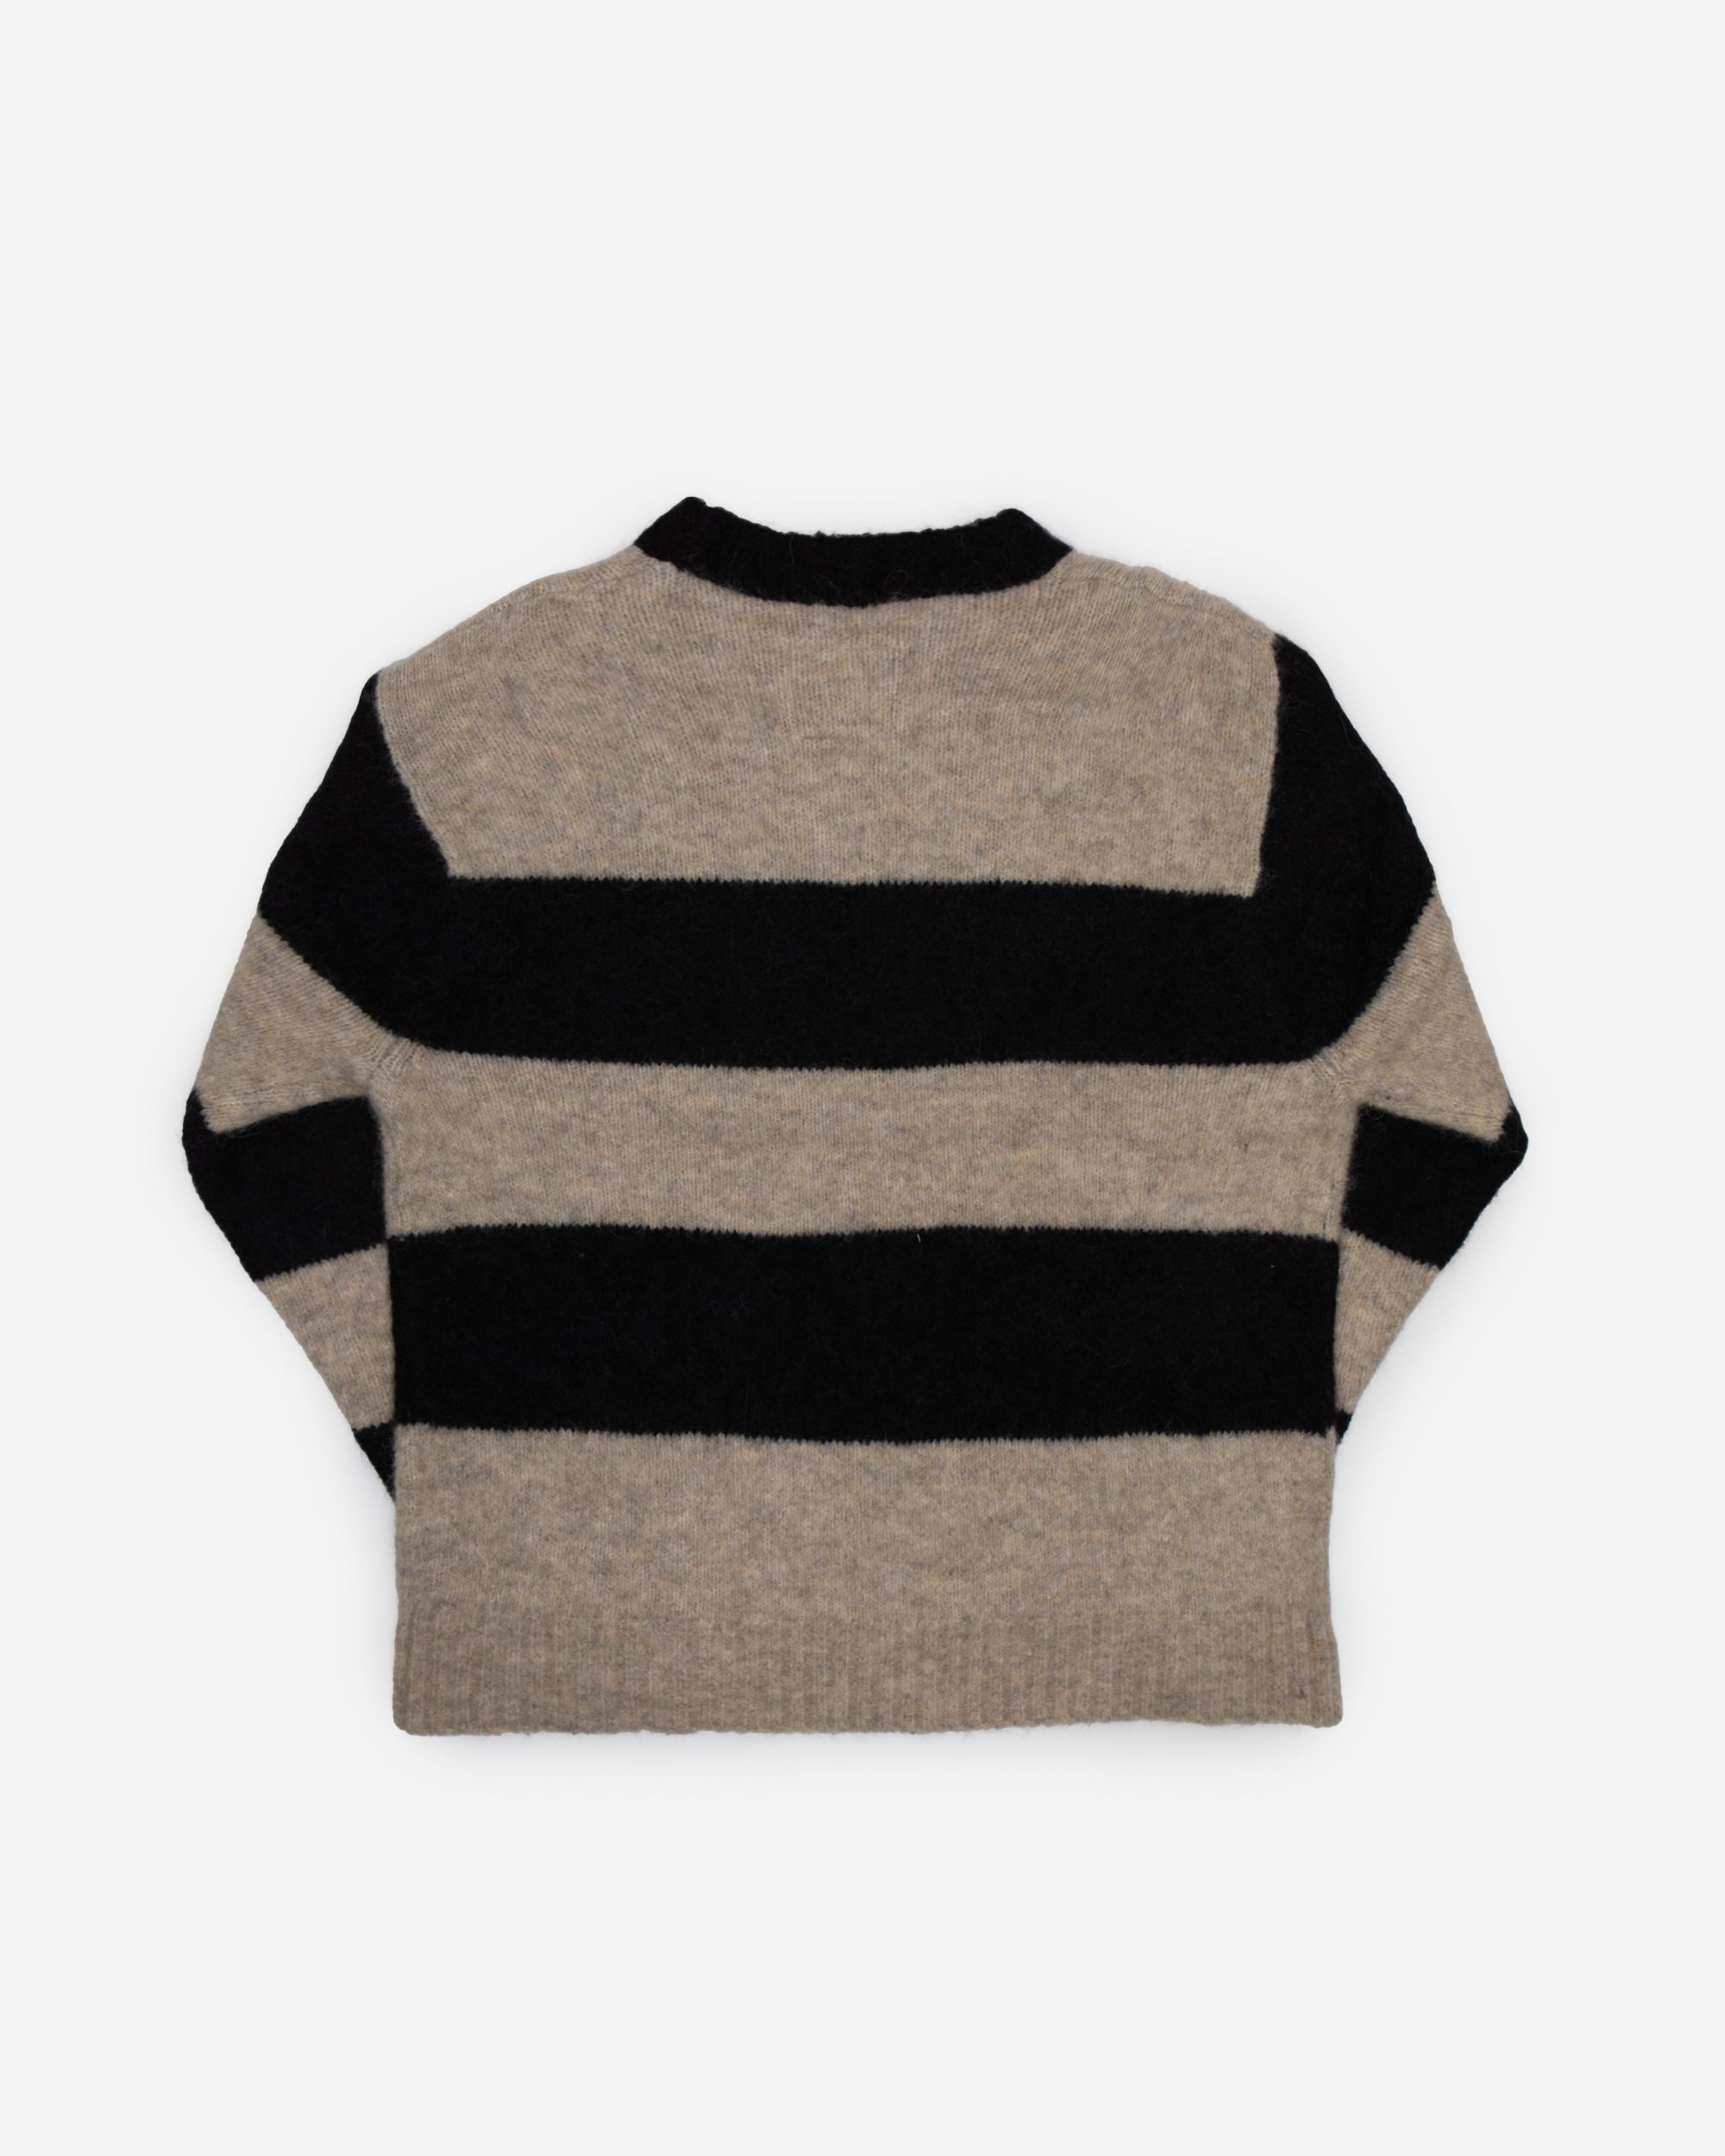 (DI)VISION Striped Logo Knit Sweater BLACK / WHITE STRIPE 130002-1